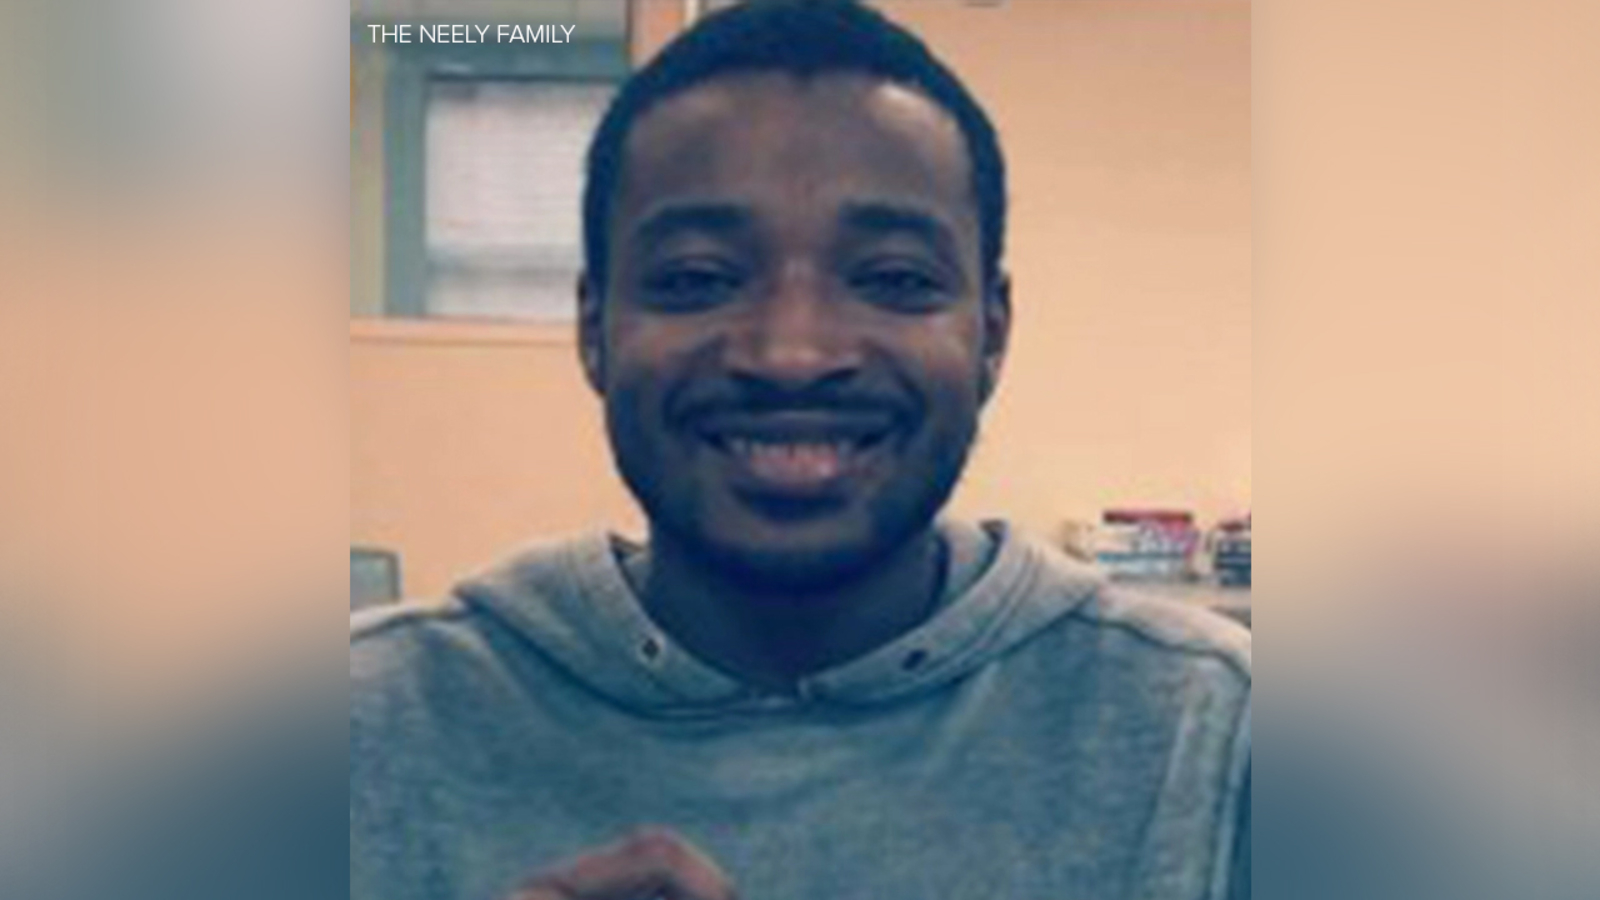 Fellow subway rider, Manhattan DA speak out on Jordan Neely death